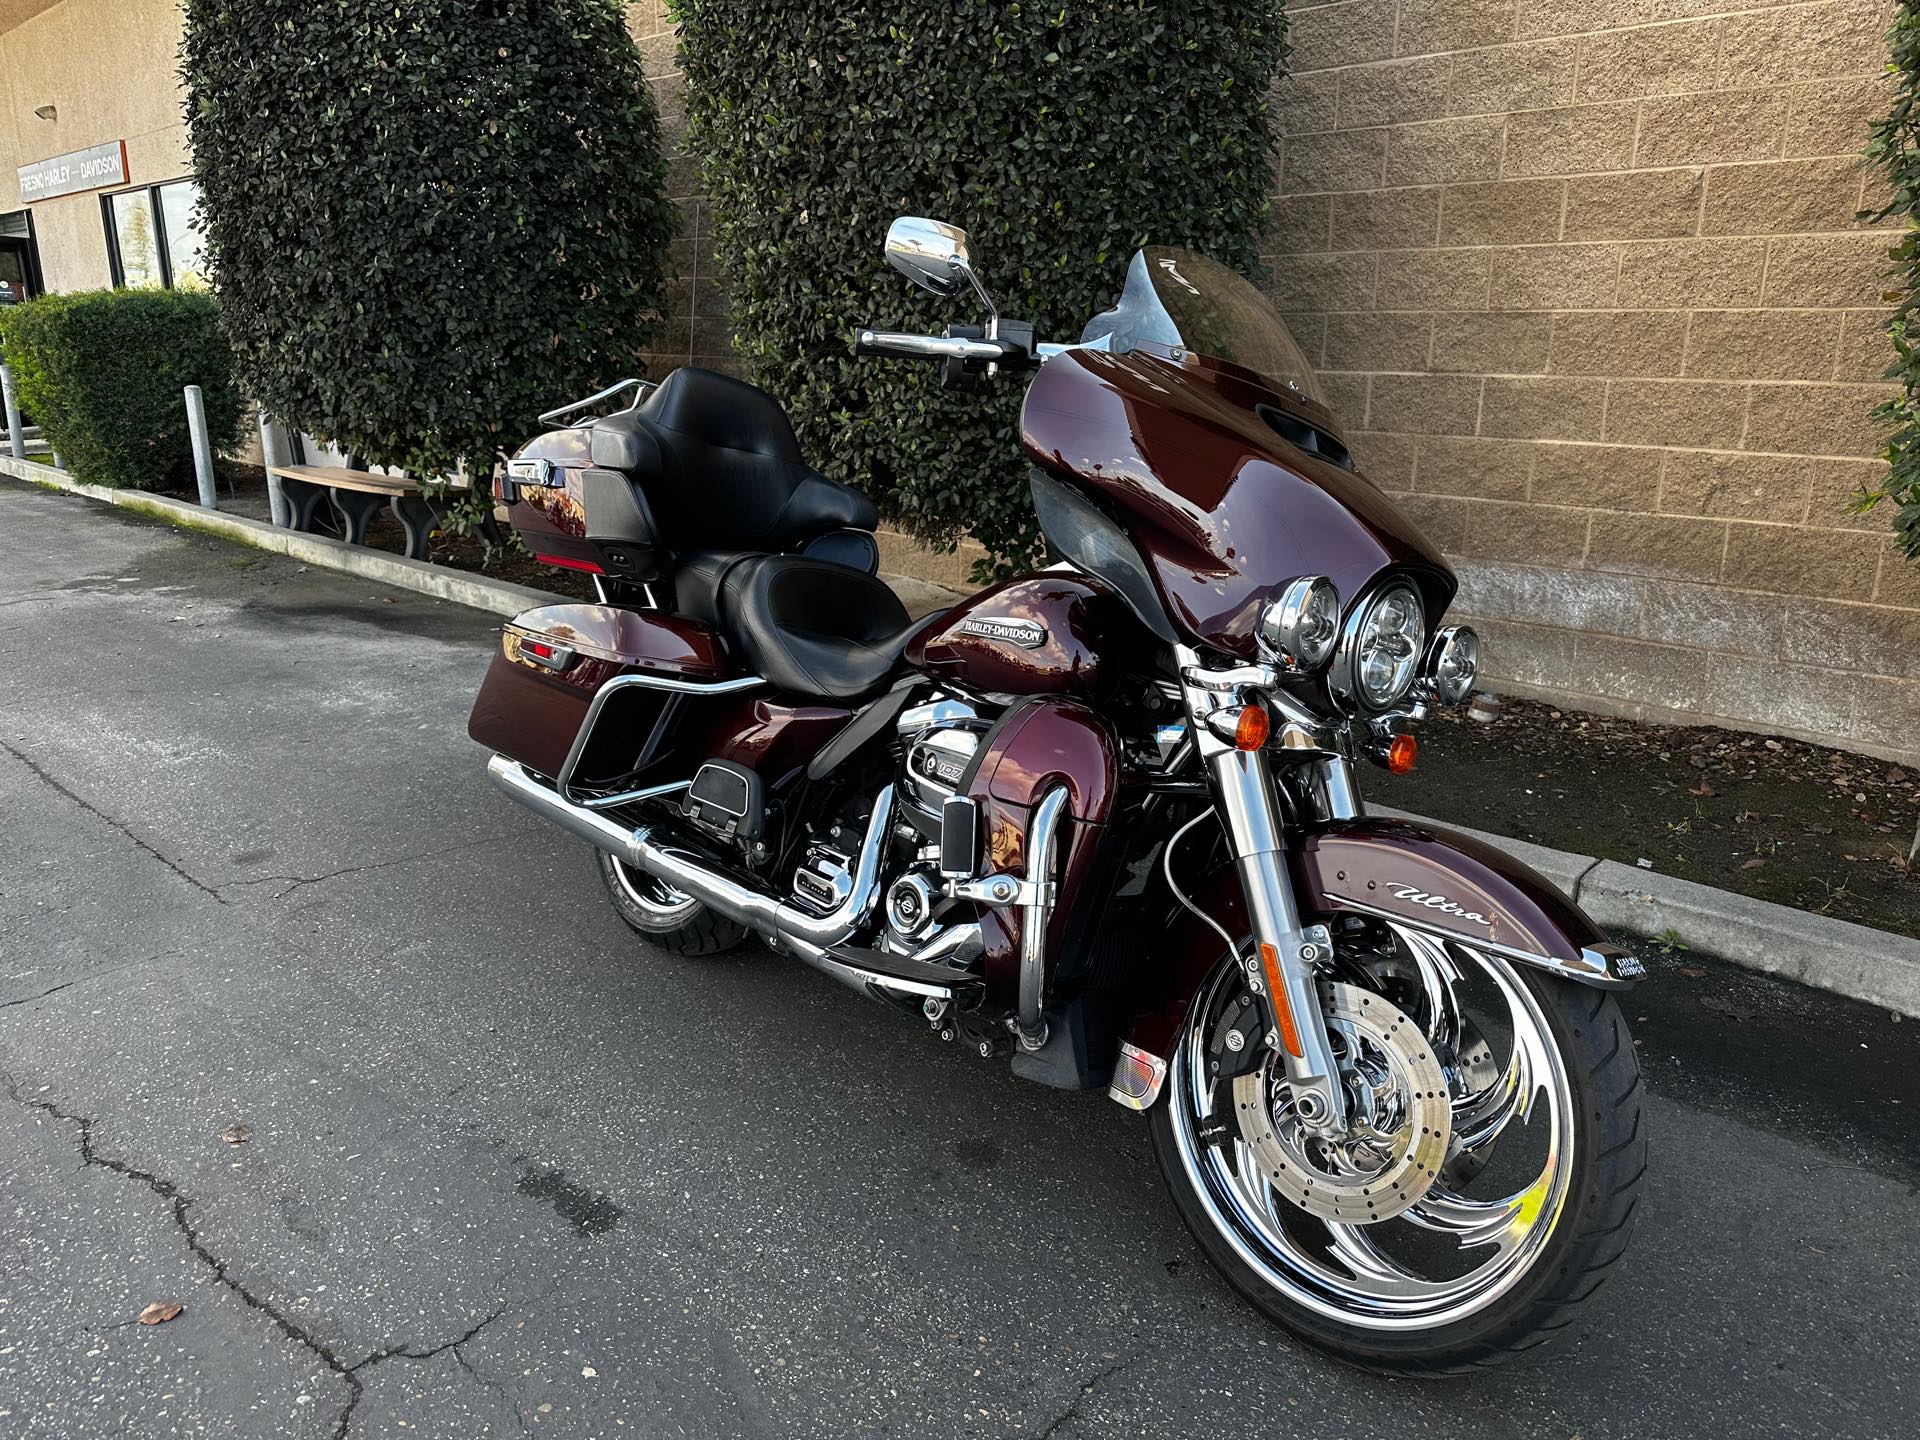 2019 Harley-Davidson Electra Glide Ultra Classic at Fresno Harley-Davidson